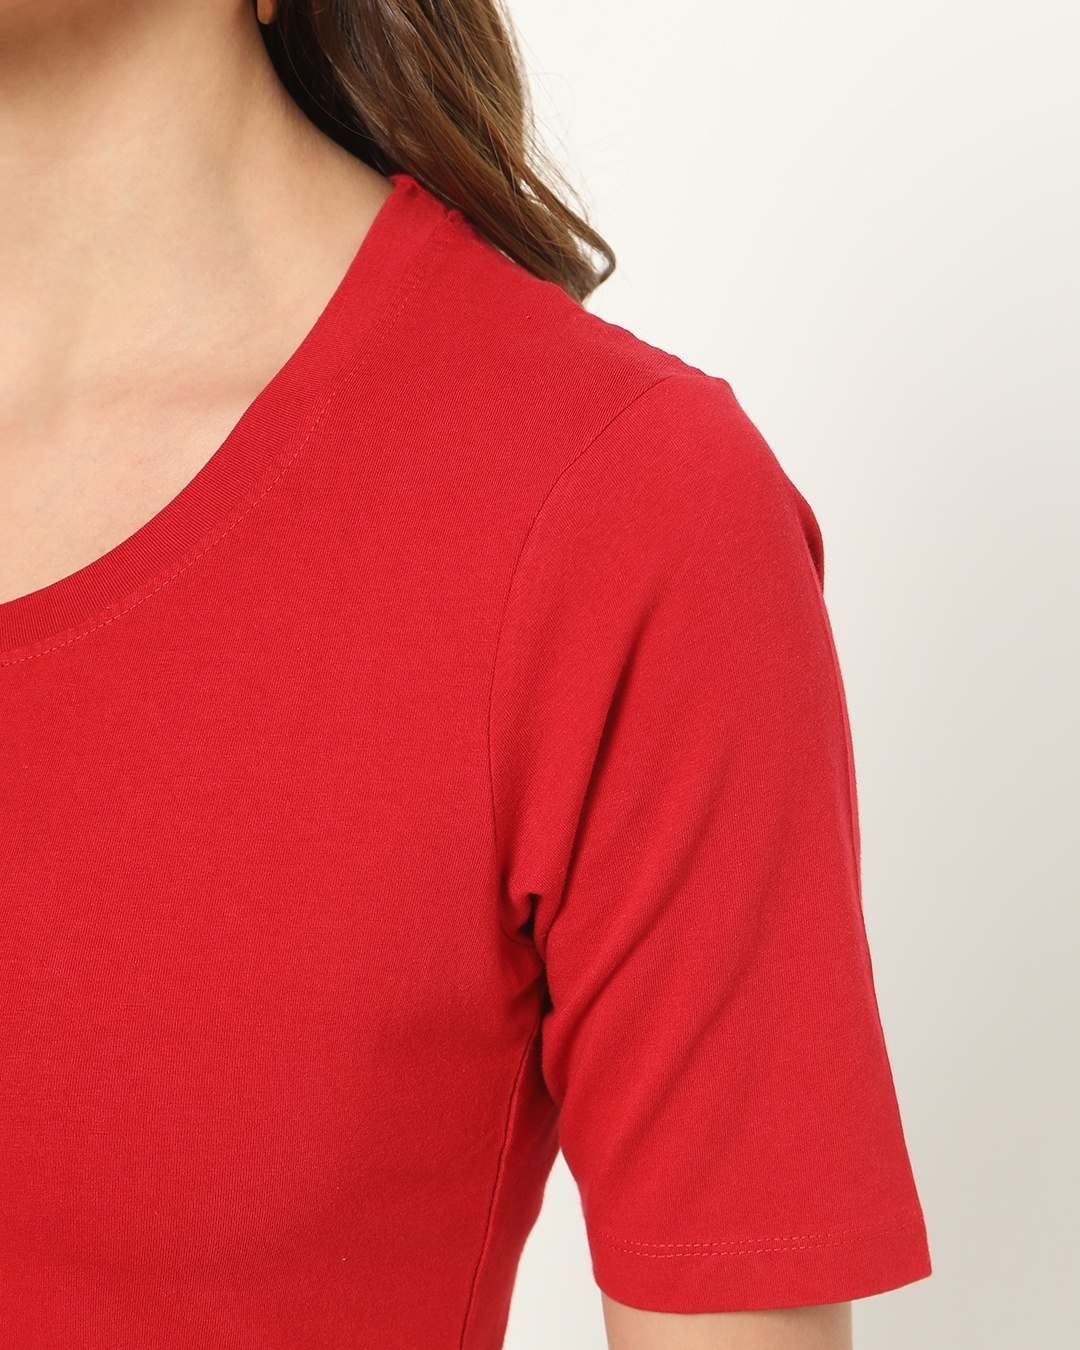 Shop Women's Red Elbow Sleeve Scoop Neck T-shirt